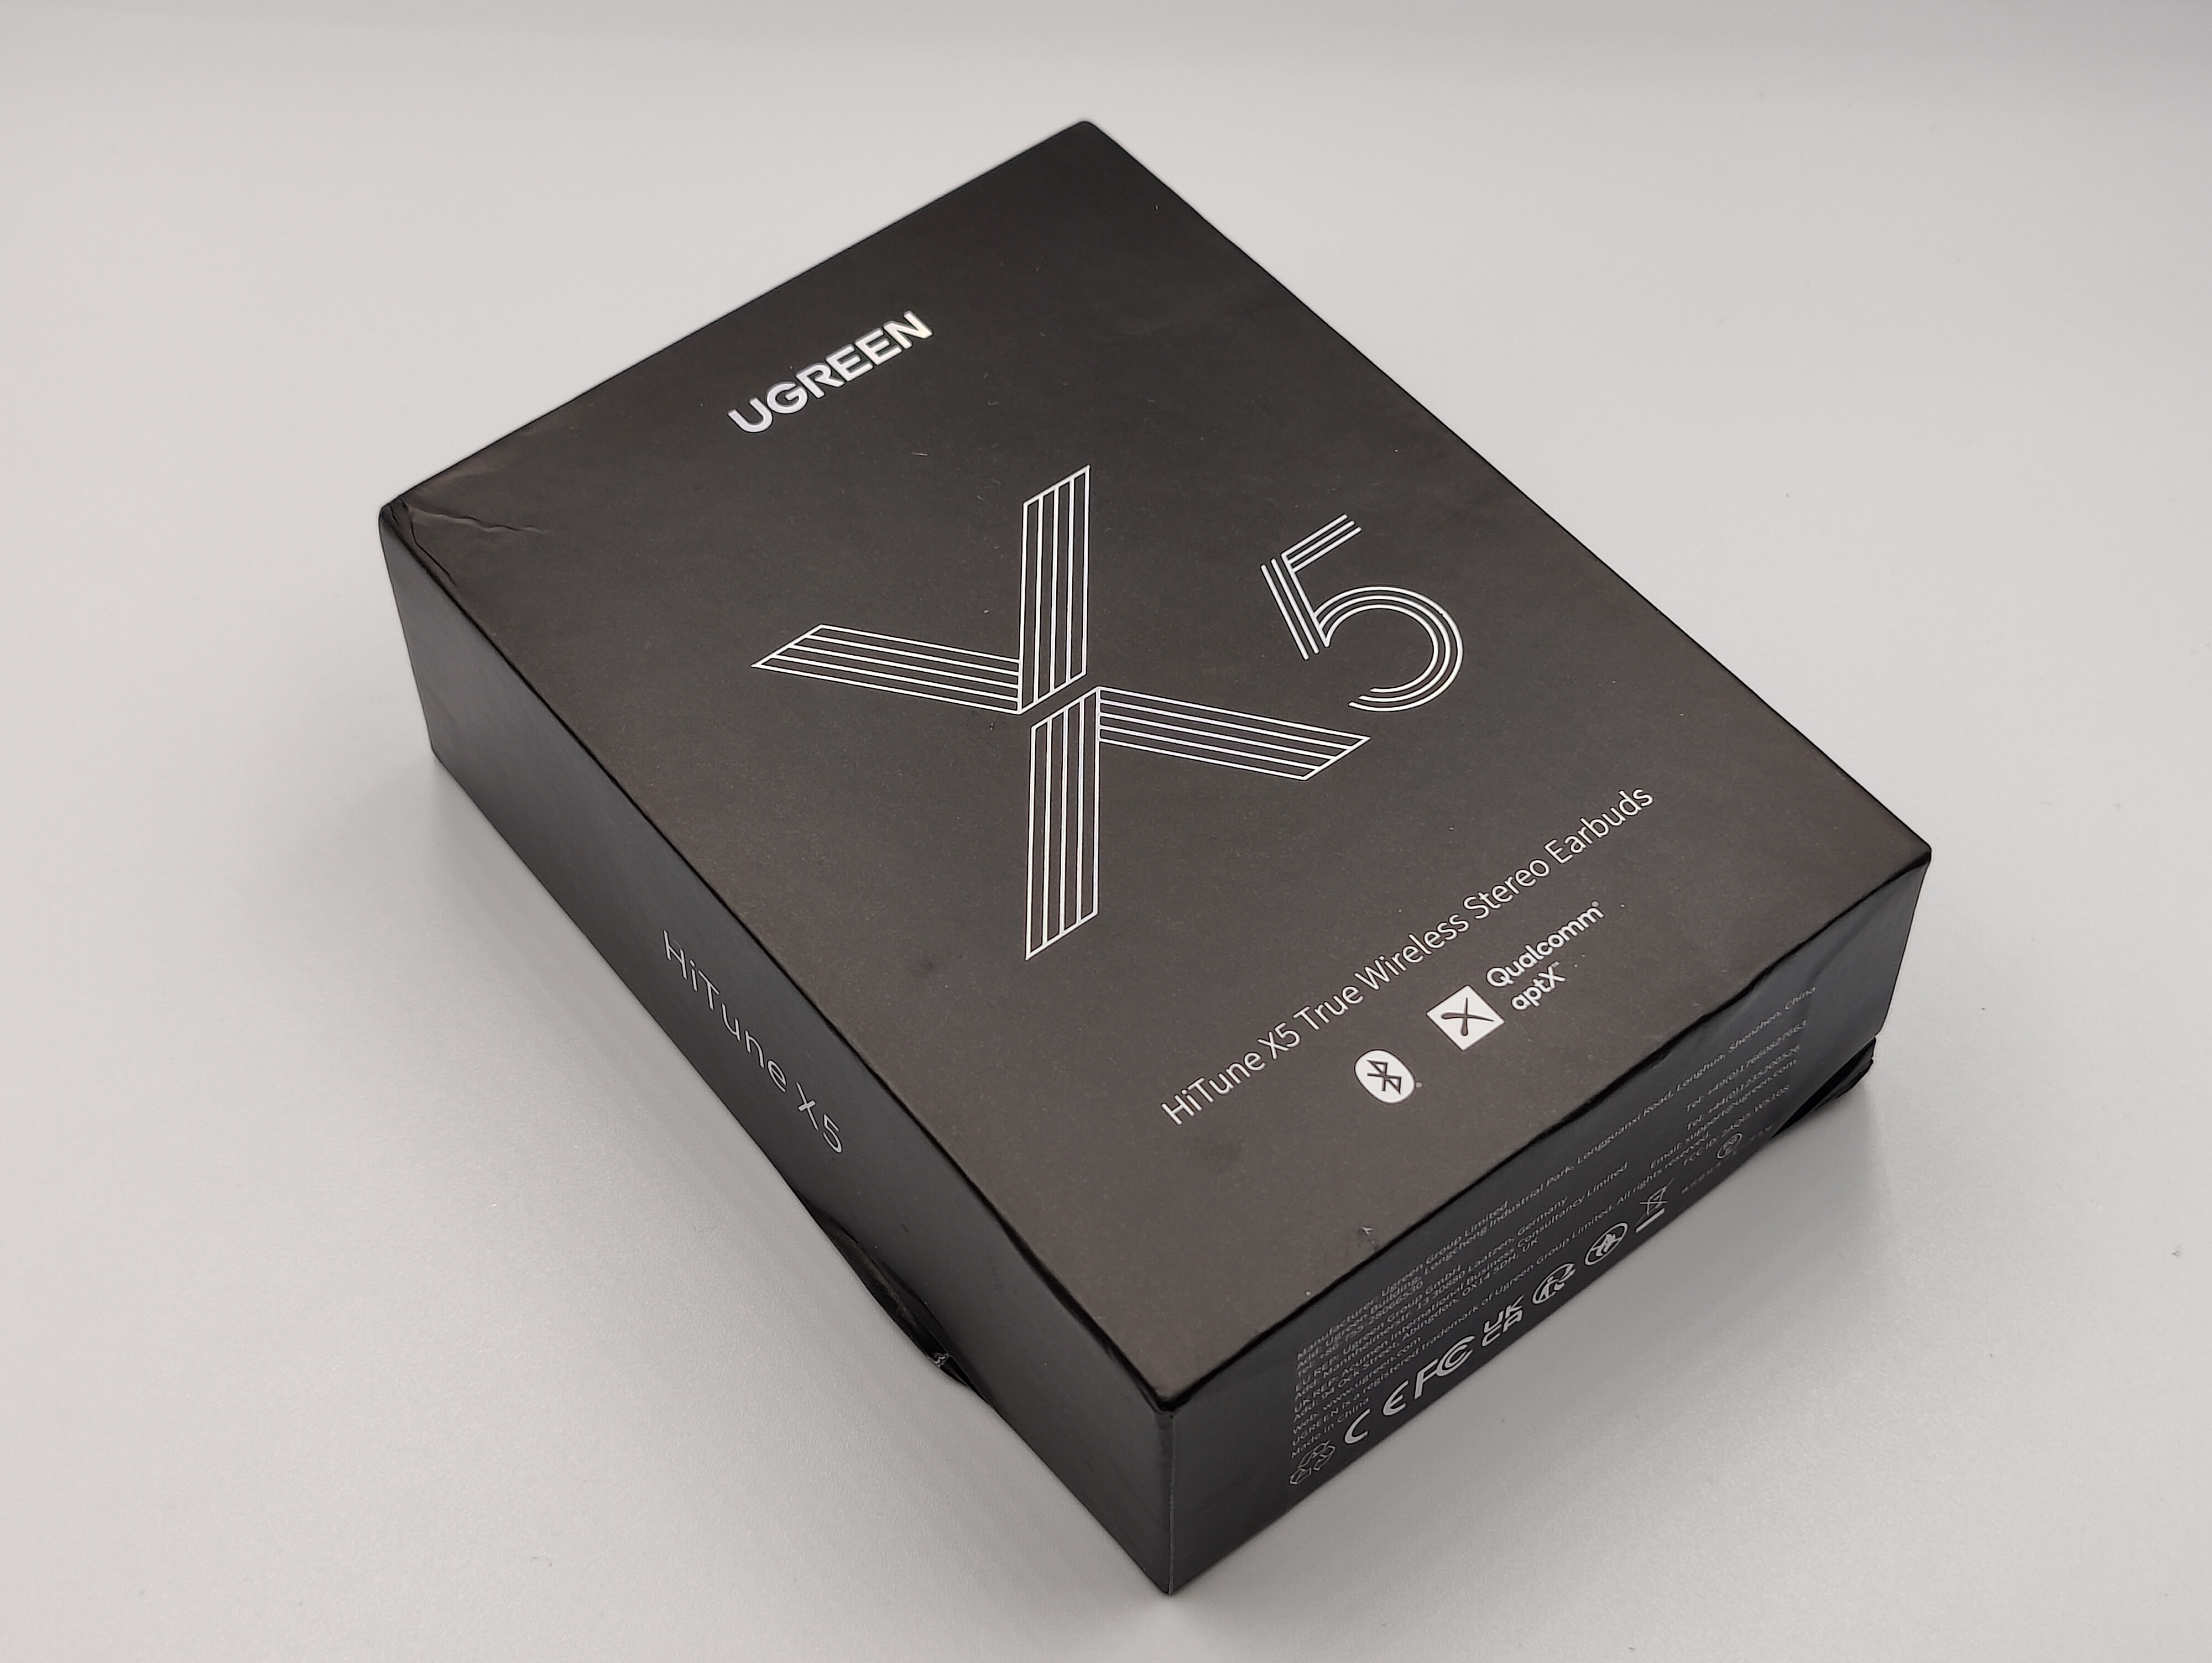 Ugreen hitune max5. Ugreen HITUNE x5 коробка. Huawei черная коробка. Наушники Ugreen HITUNE x5. Некст черная коробка.